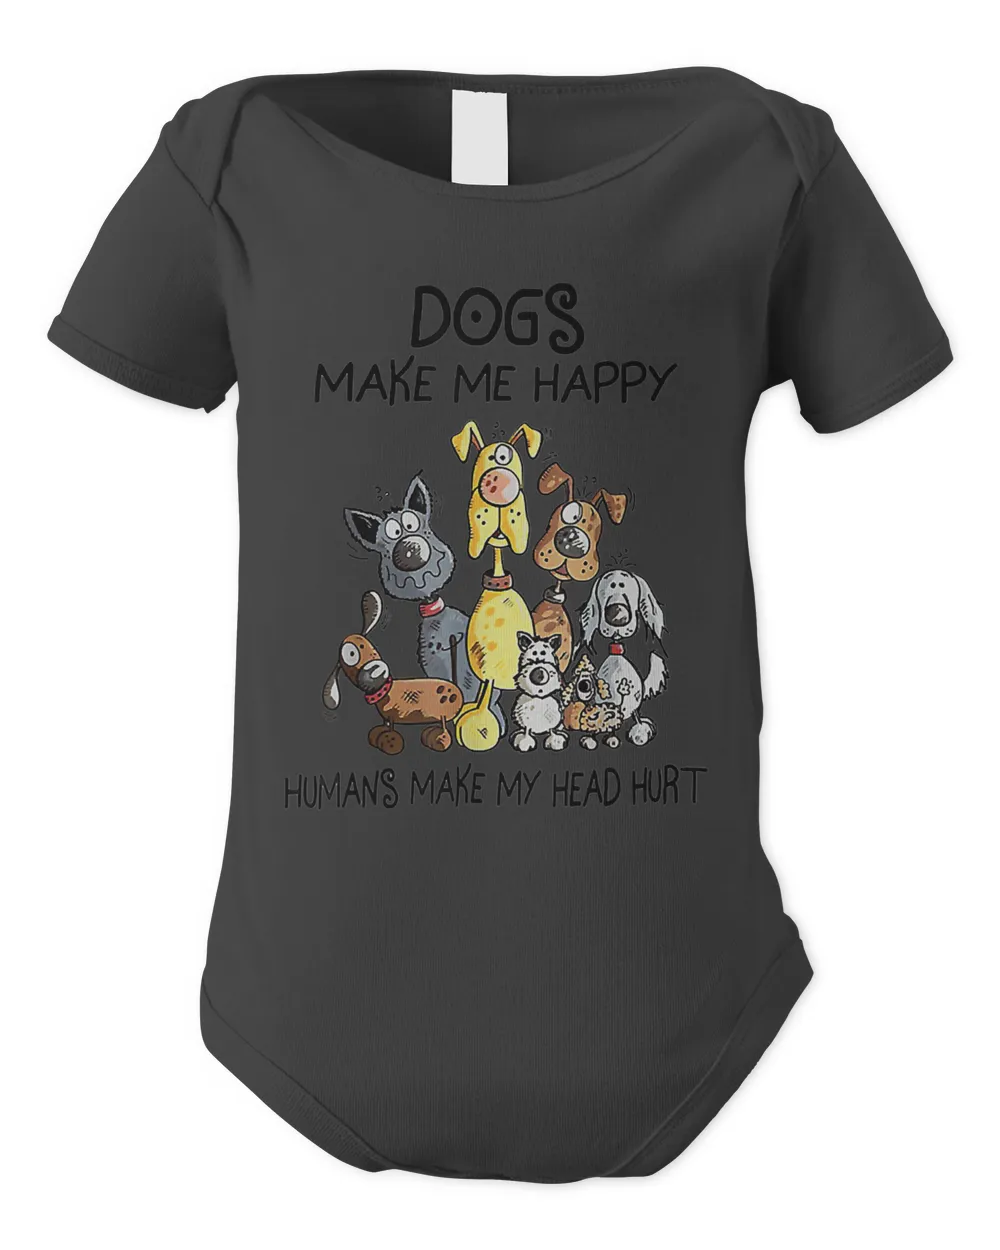 Dogs Make Me Happy, Humans Make My Head Hurt T-Shirt